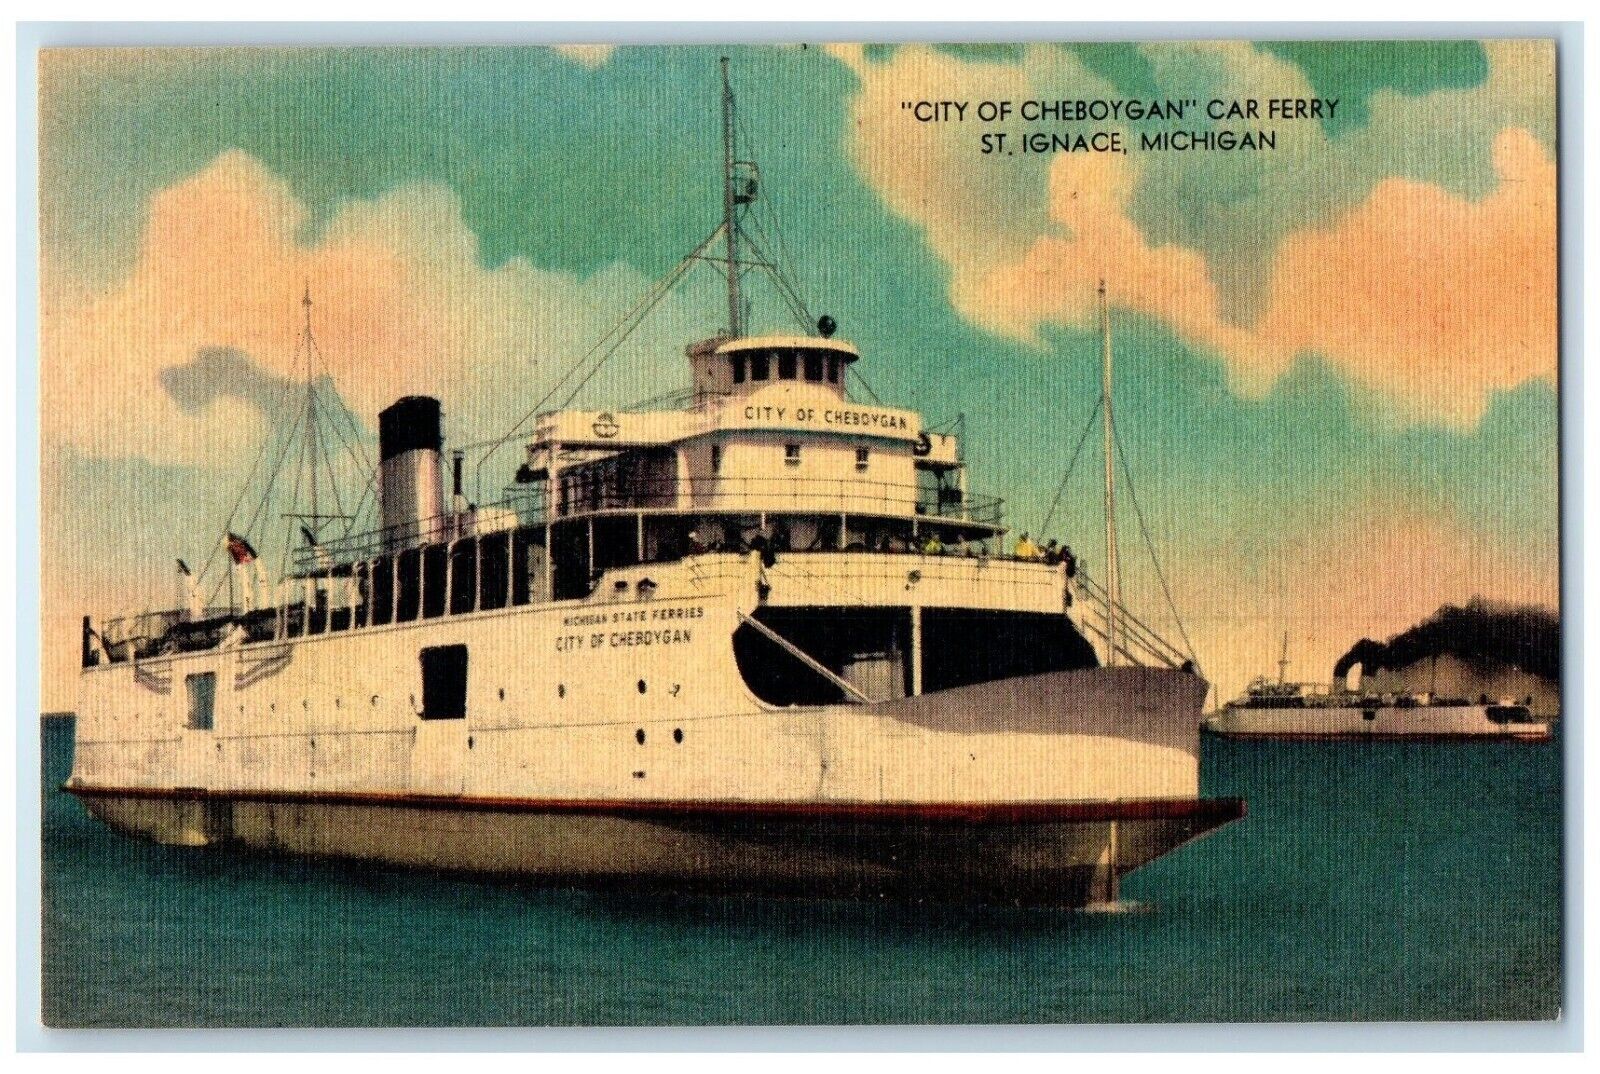 c1940 City Cheboygan Car Ferry Steamer Cruise Ship St. Ignace Michigan Postcard